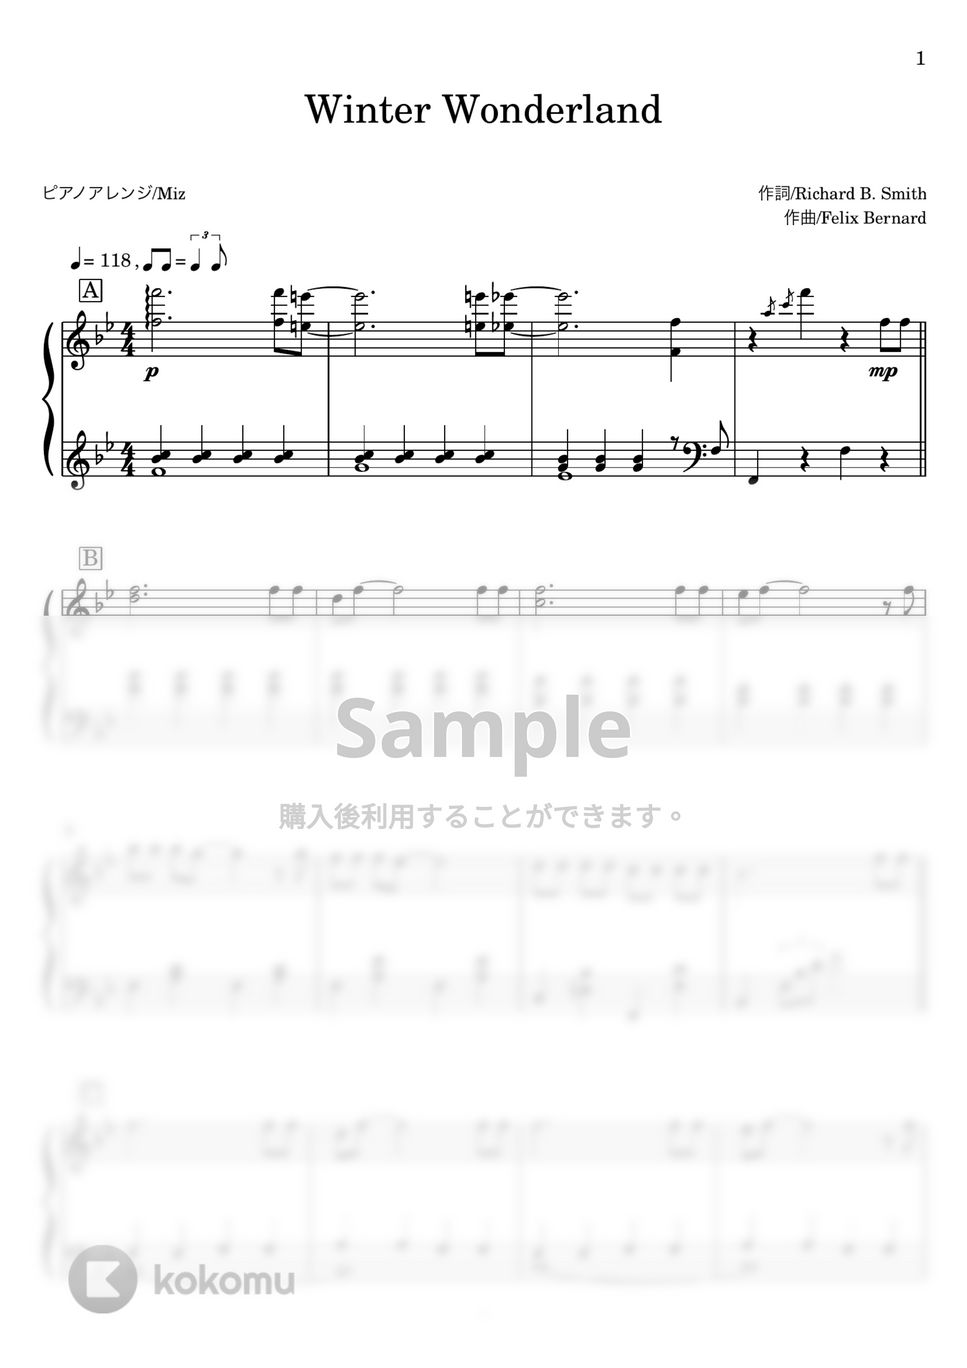 F.バーナード - ウィンター・ワンダーランド/Winter Wonderland (ピアノソロ) by Miz